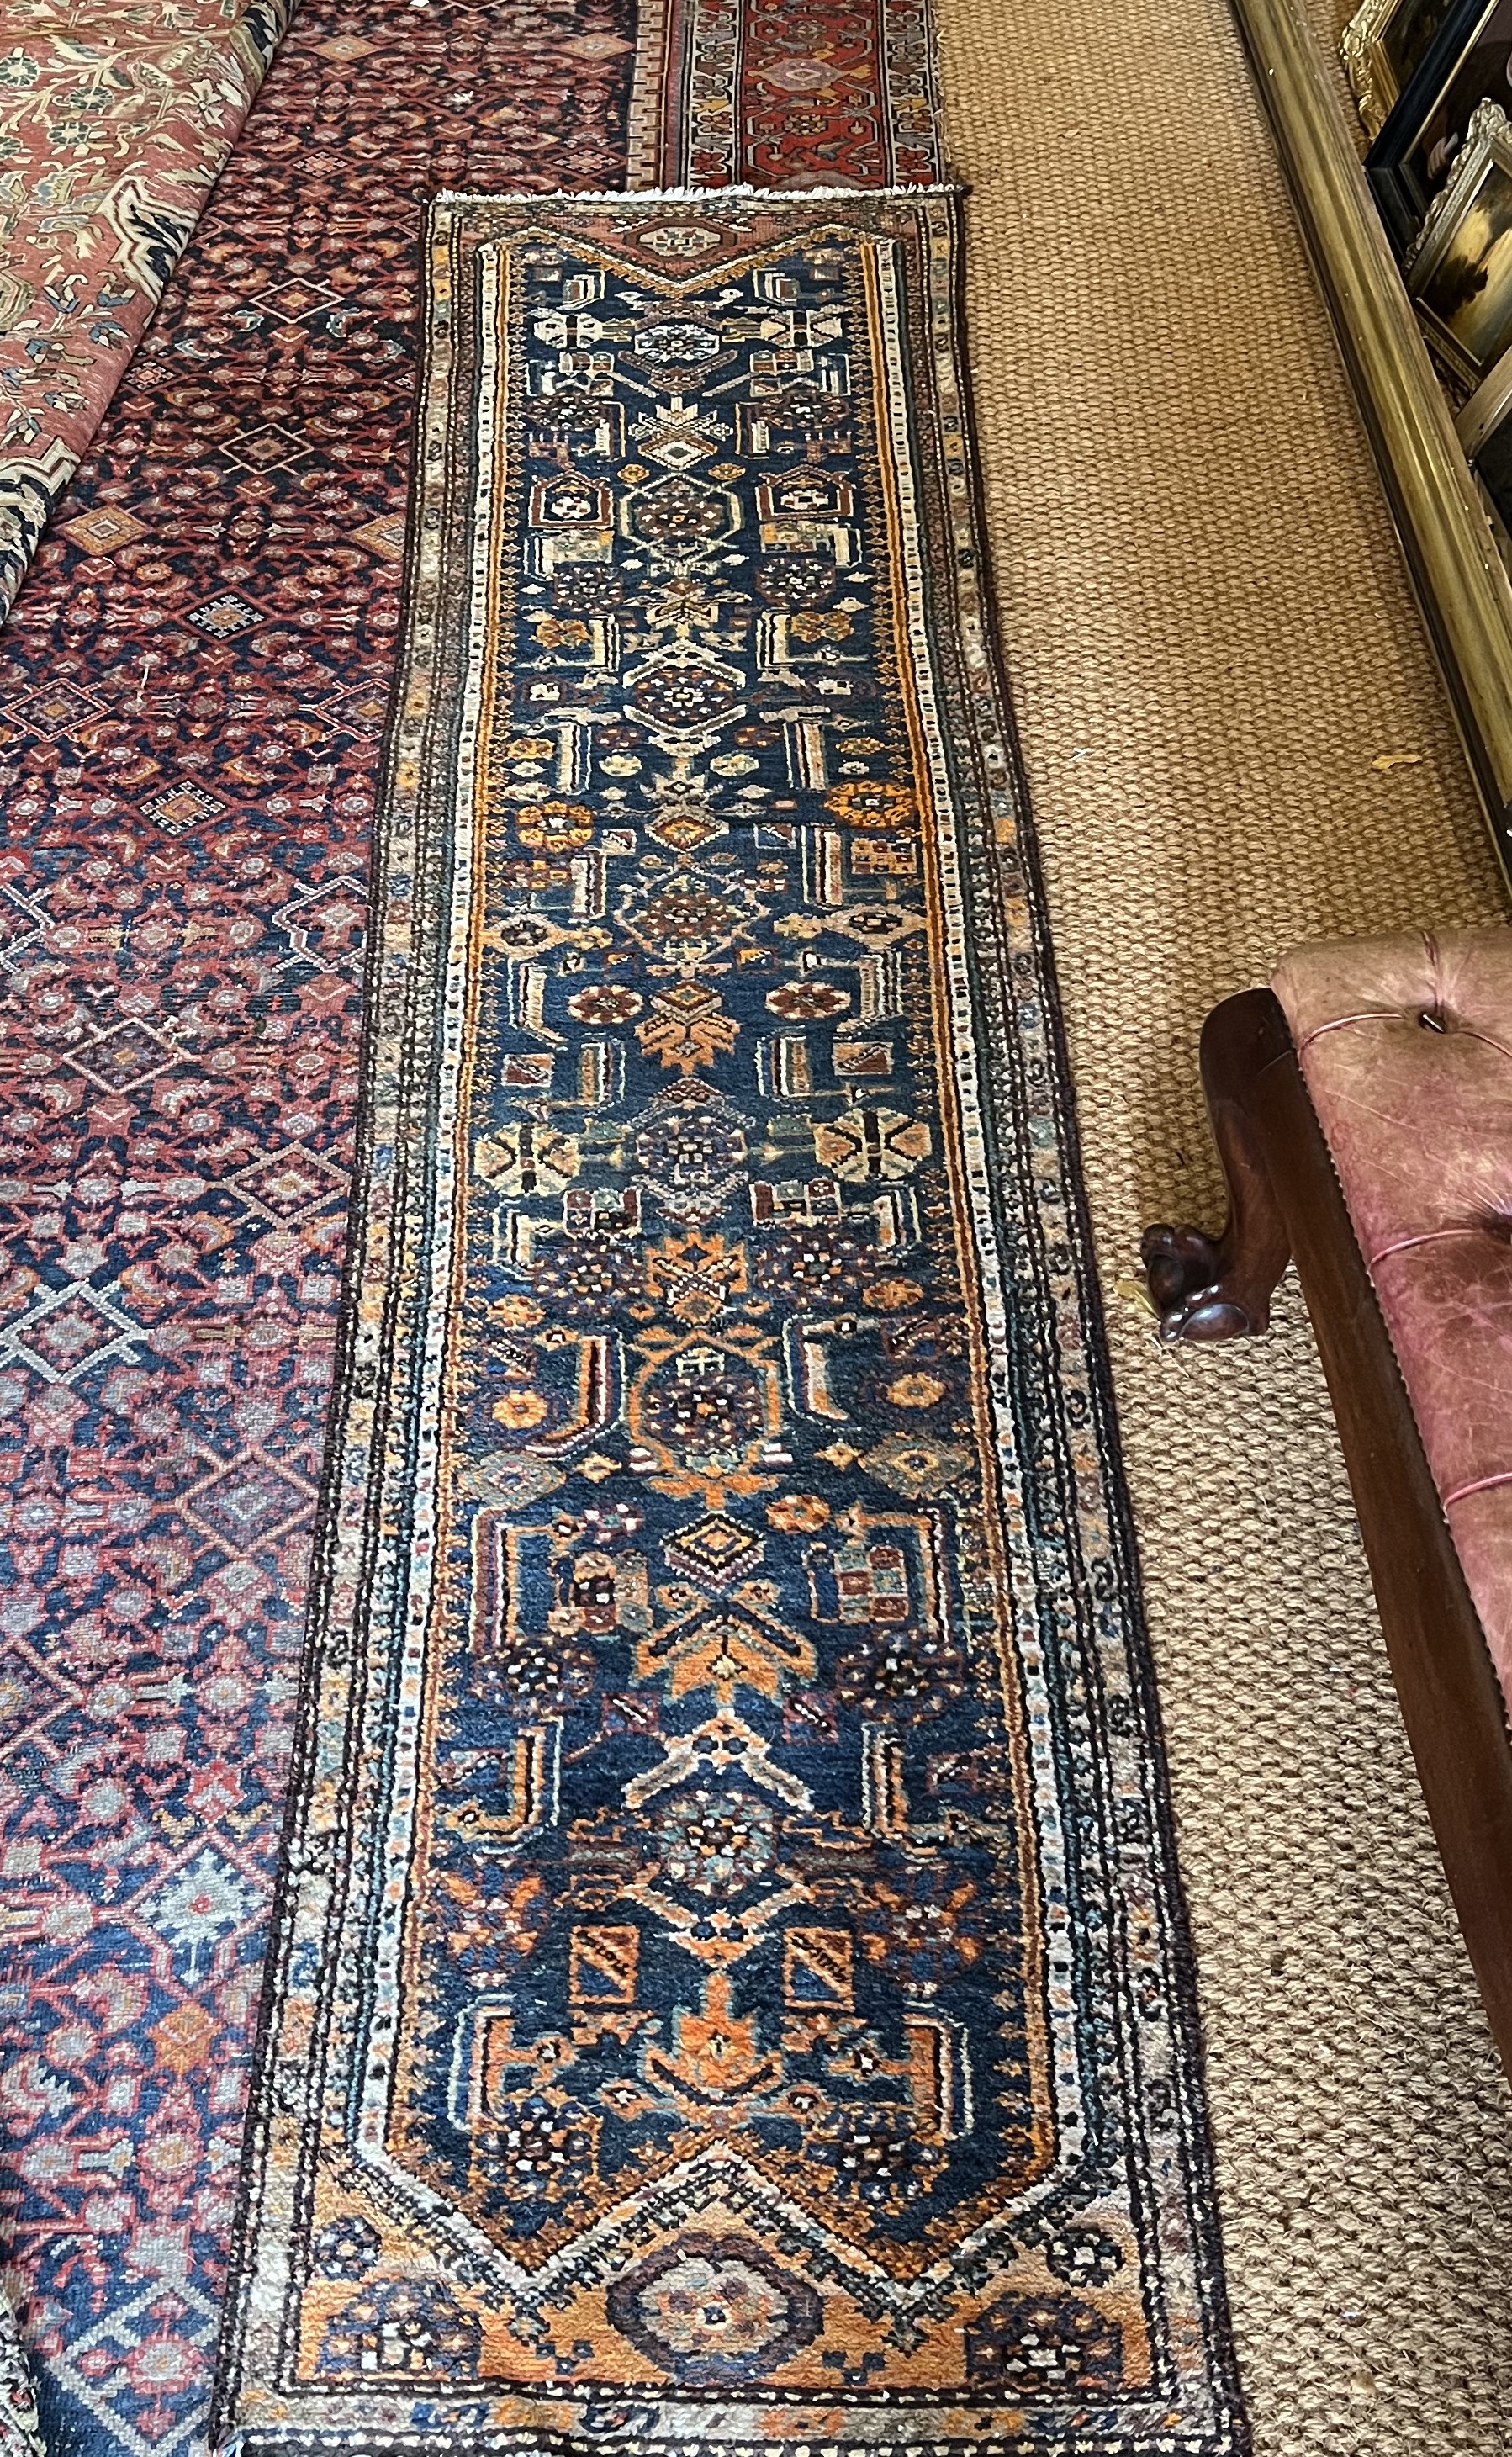 Hamdon Persian rug - Image 2 of 2